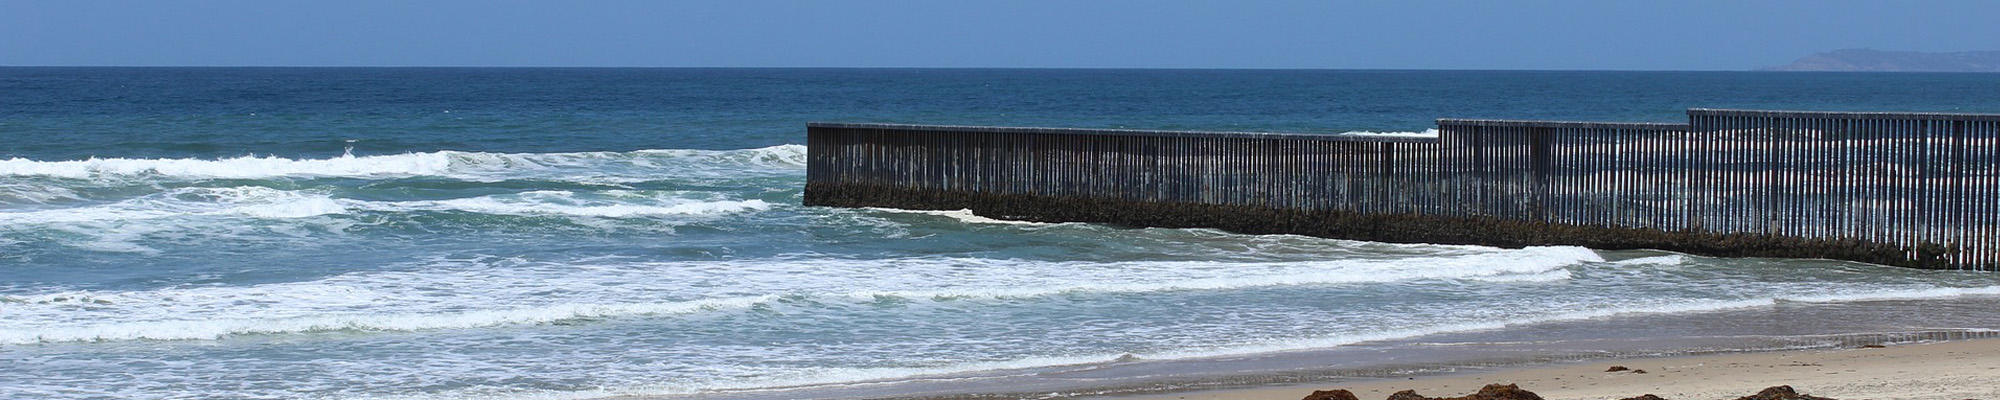 beach border fence San Diego and Tijuana